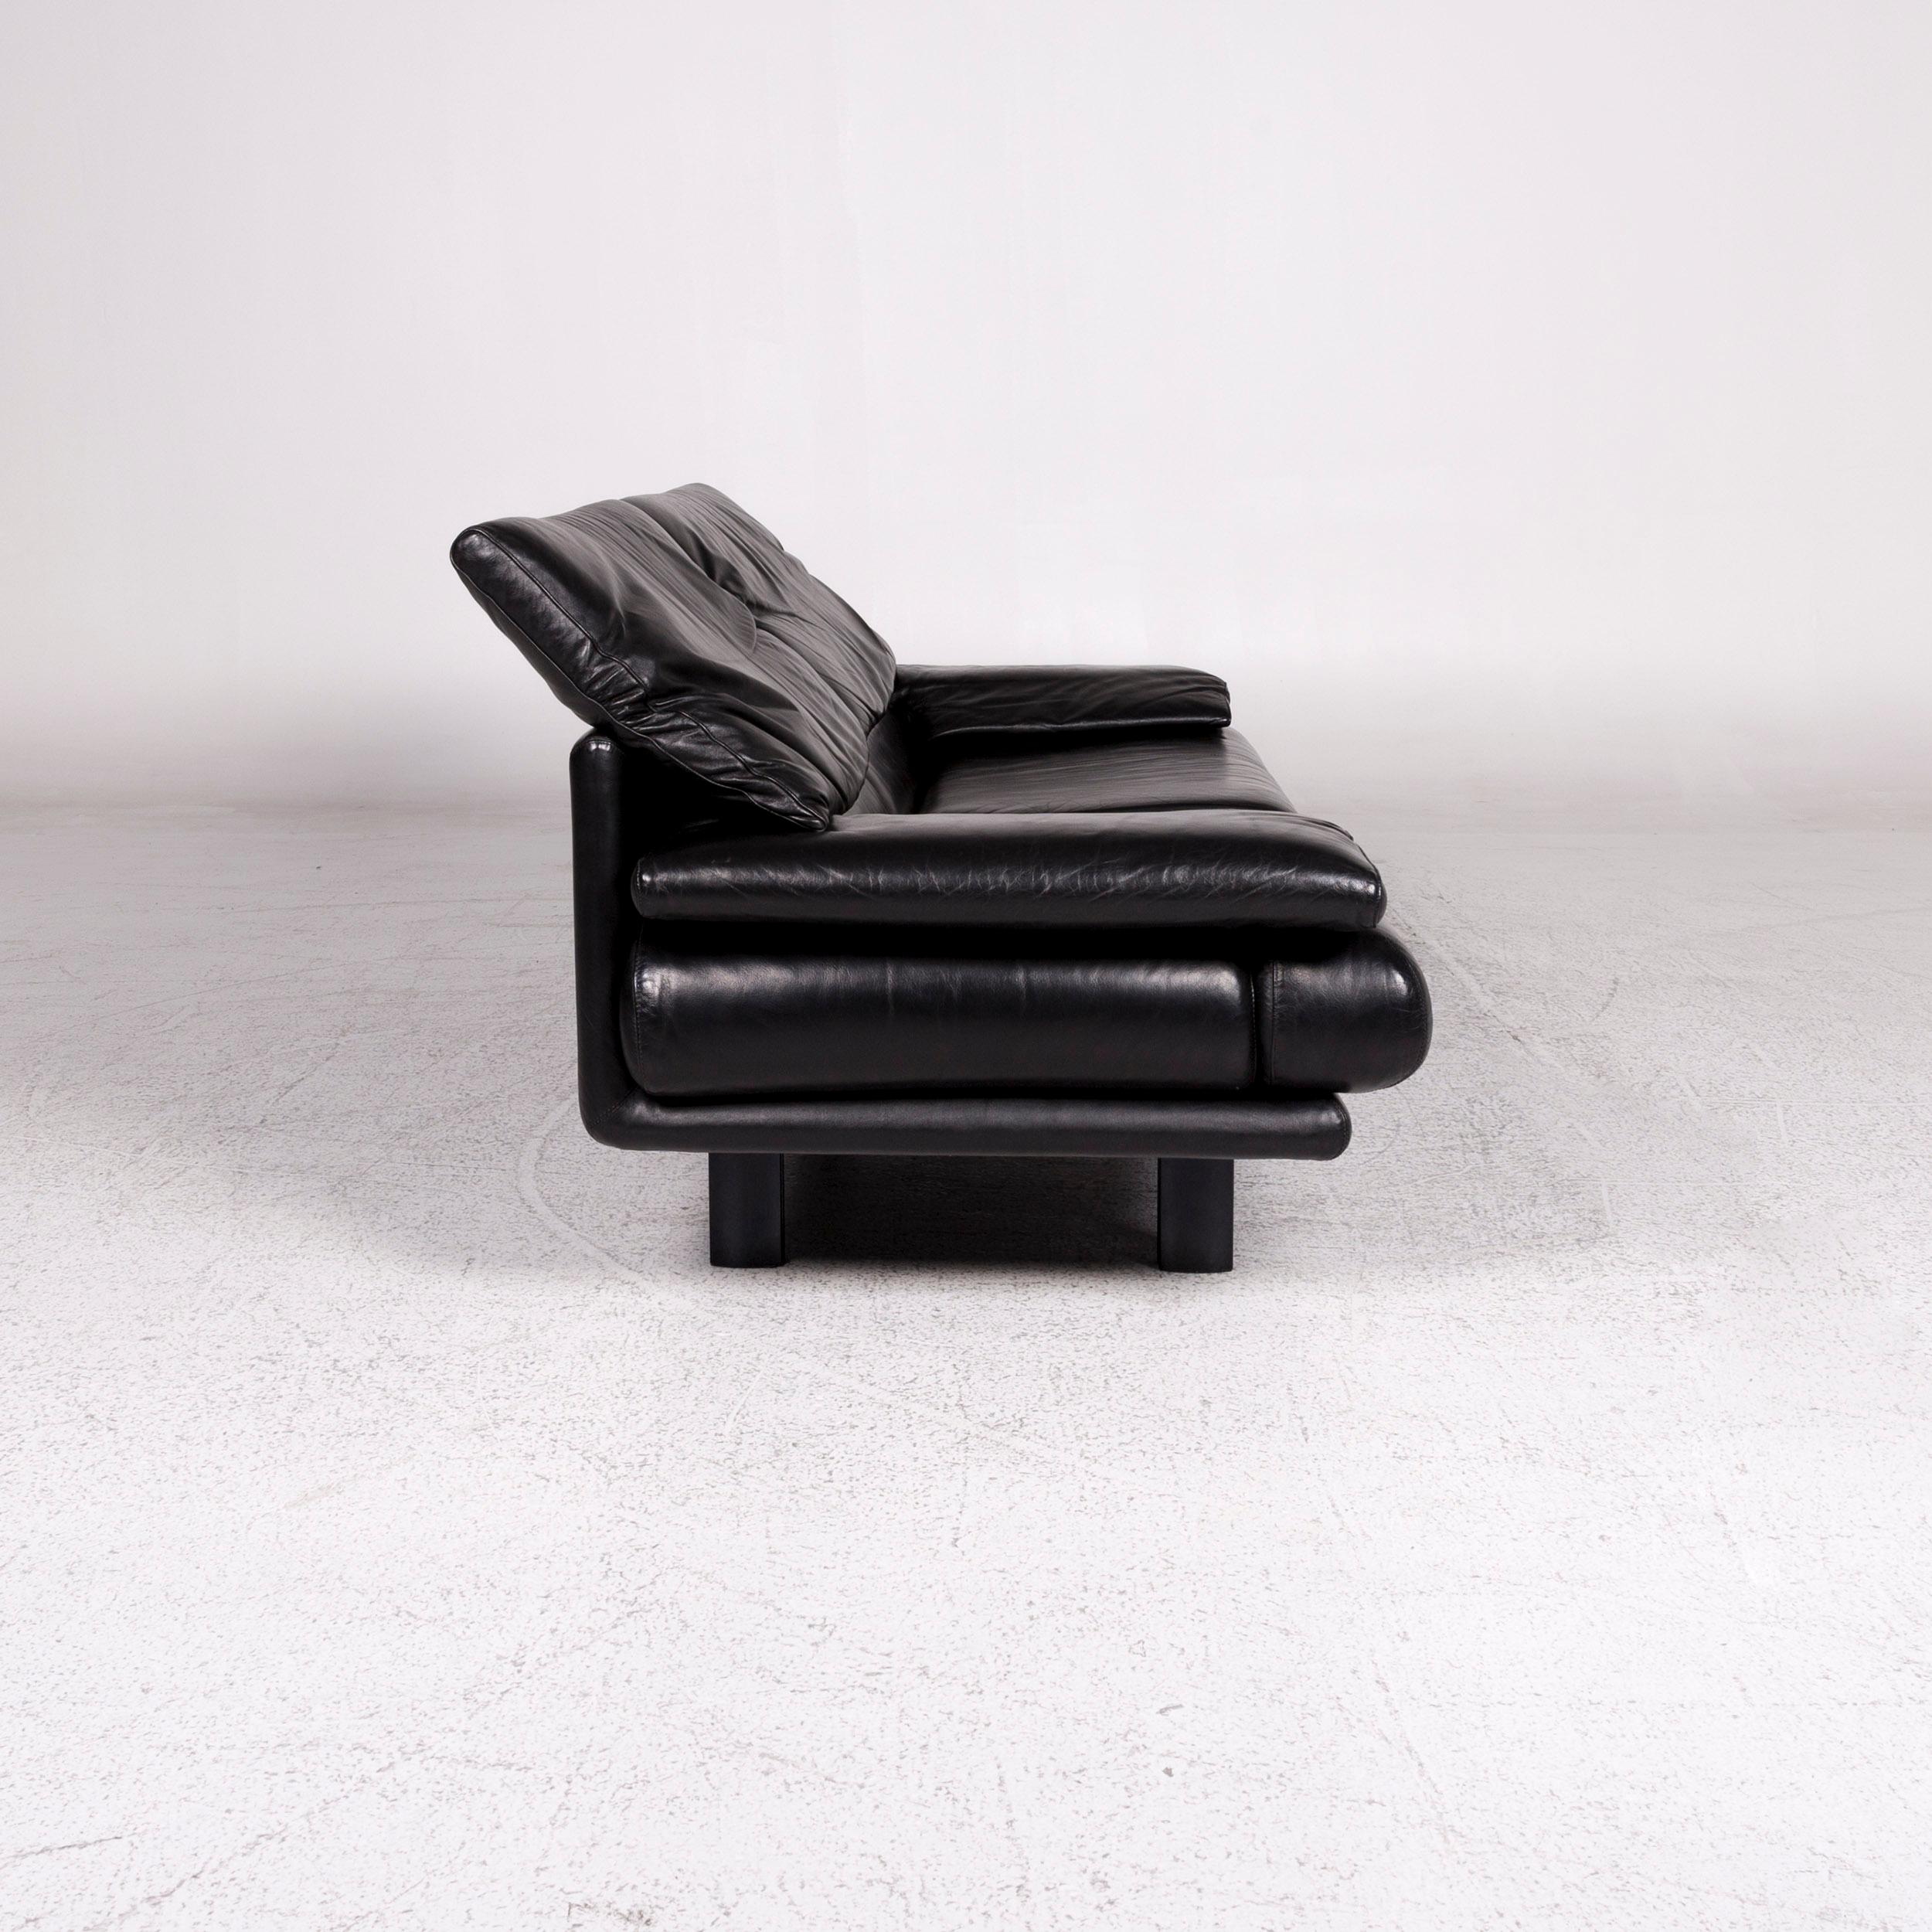 B & B Italia Alanda Leather Sofa Black Two-Seat Function Paolo Piva Couch 1